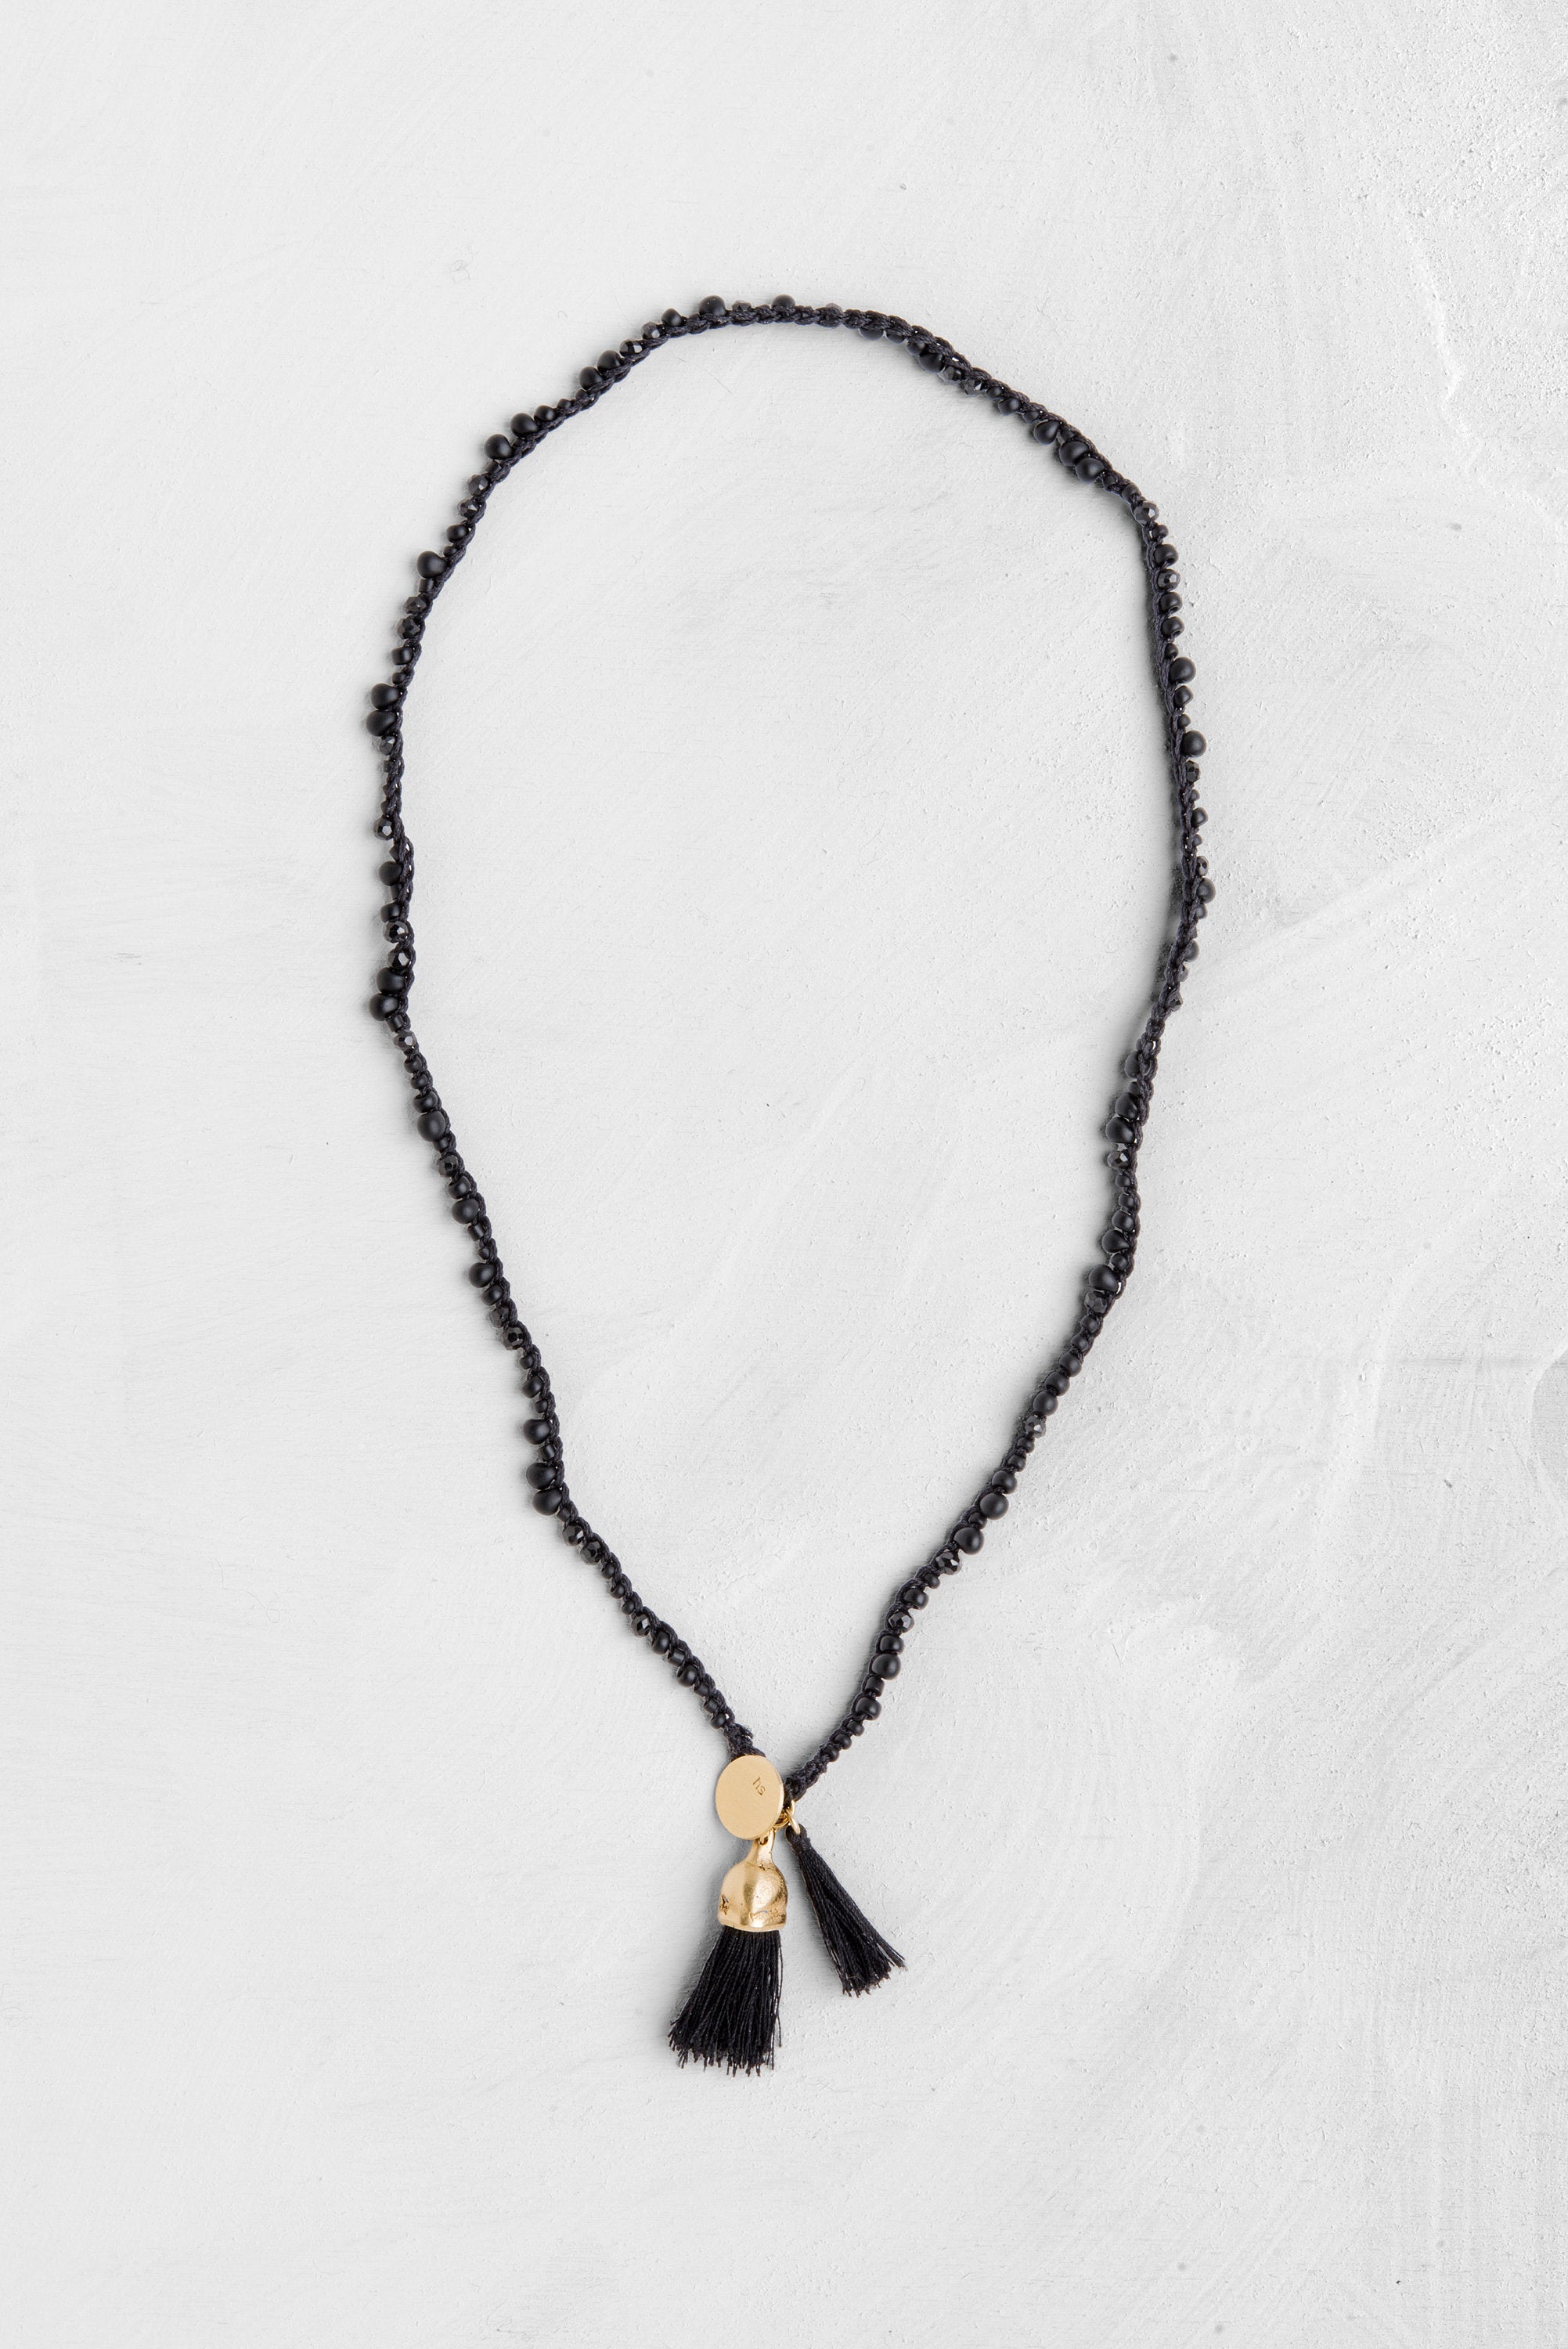 Handmade Unique Black & Gold Organic necklace - hs